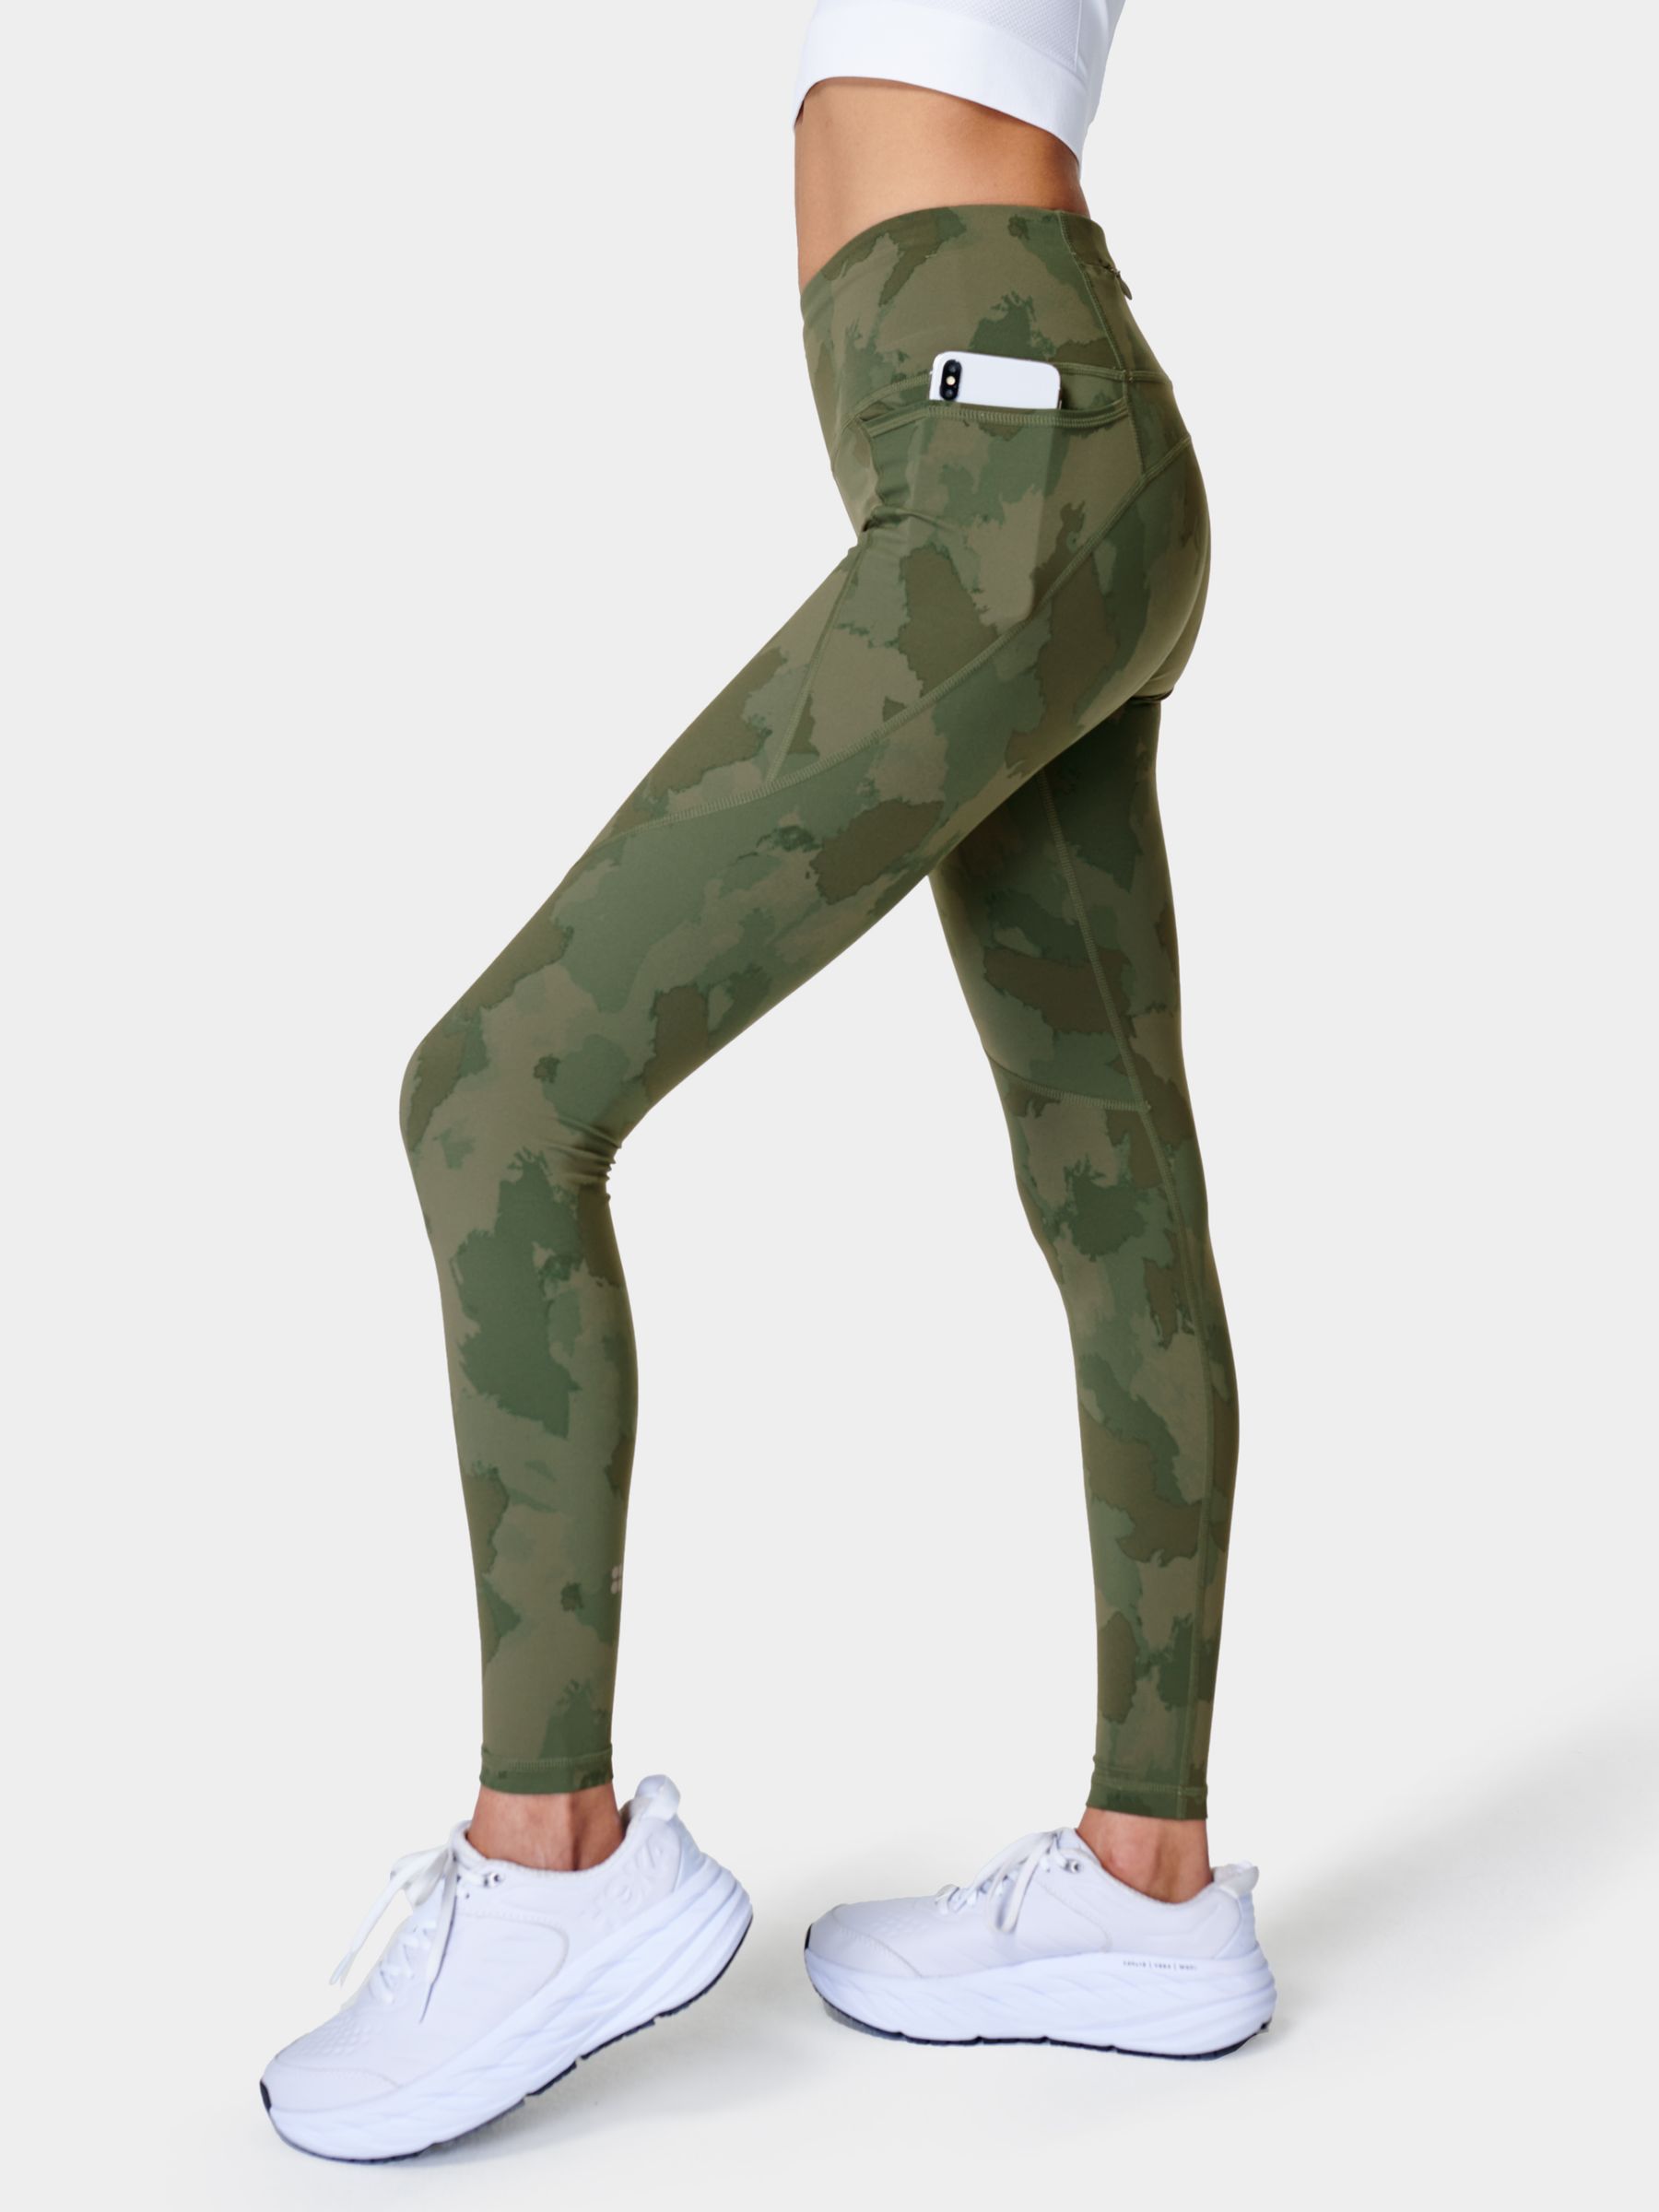 Power Gym Leggings - Green Painted Camo Print